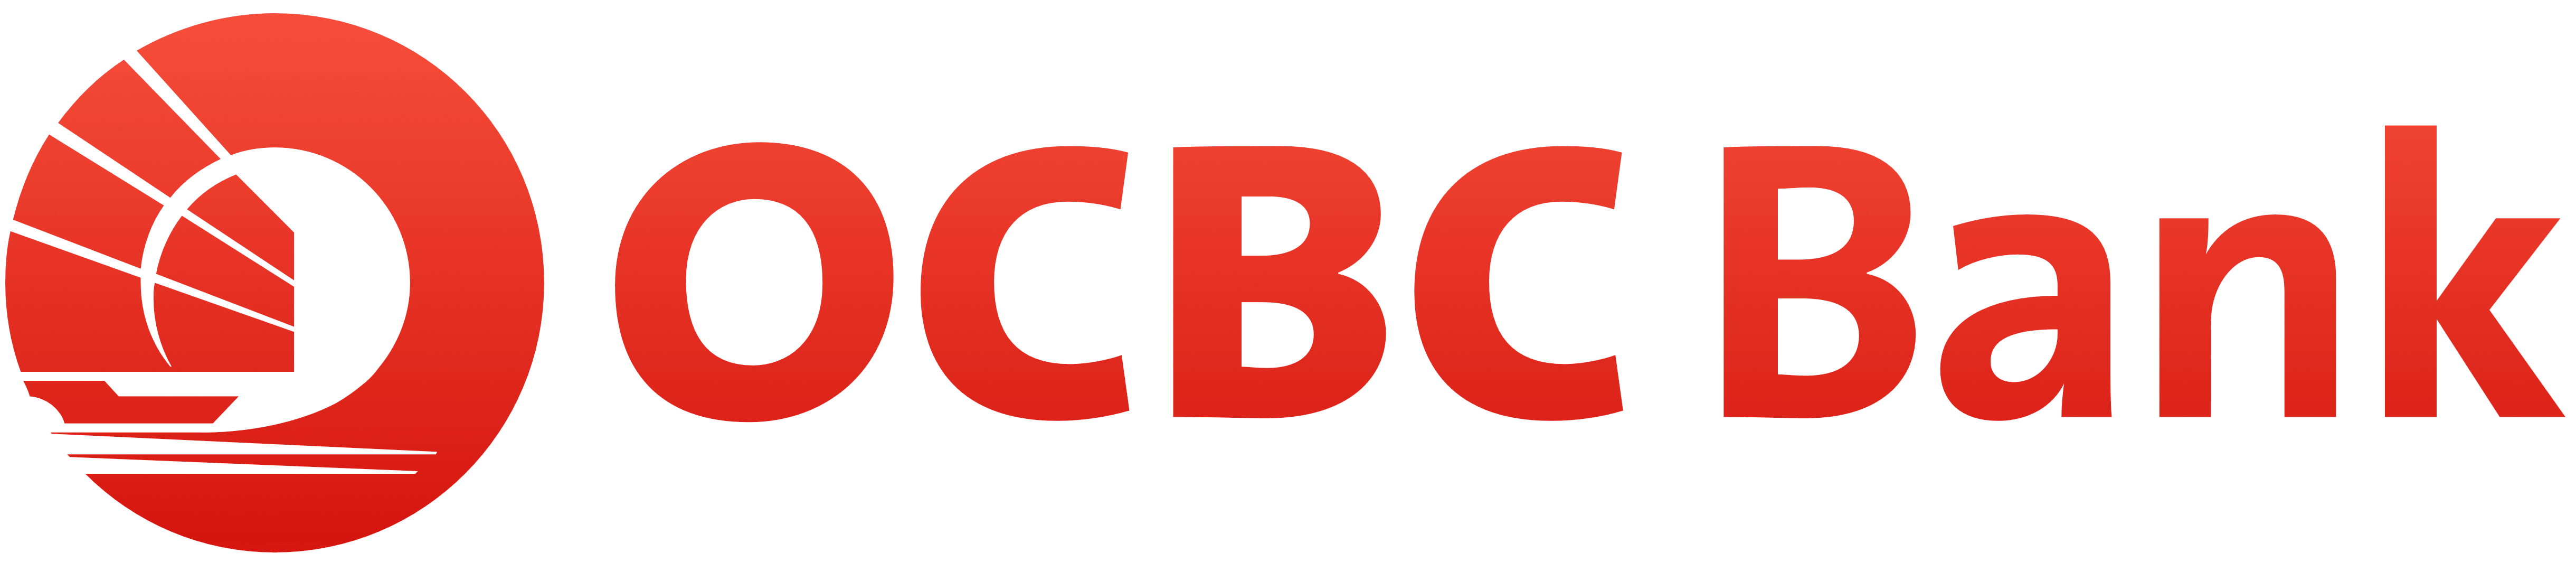 OCBC Bank Singapore logo, logotype